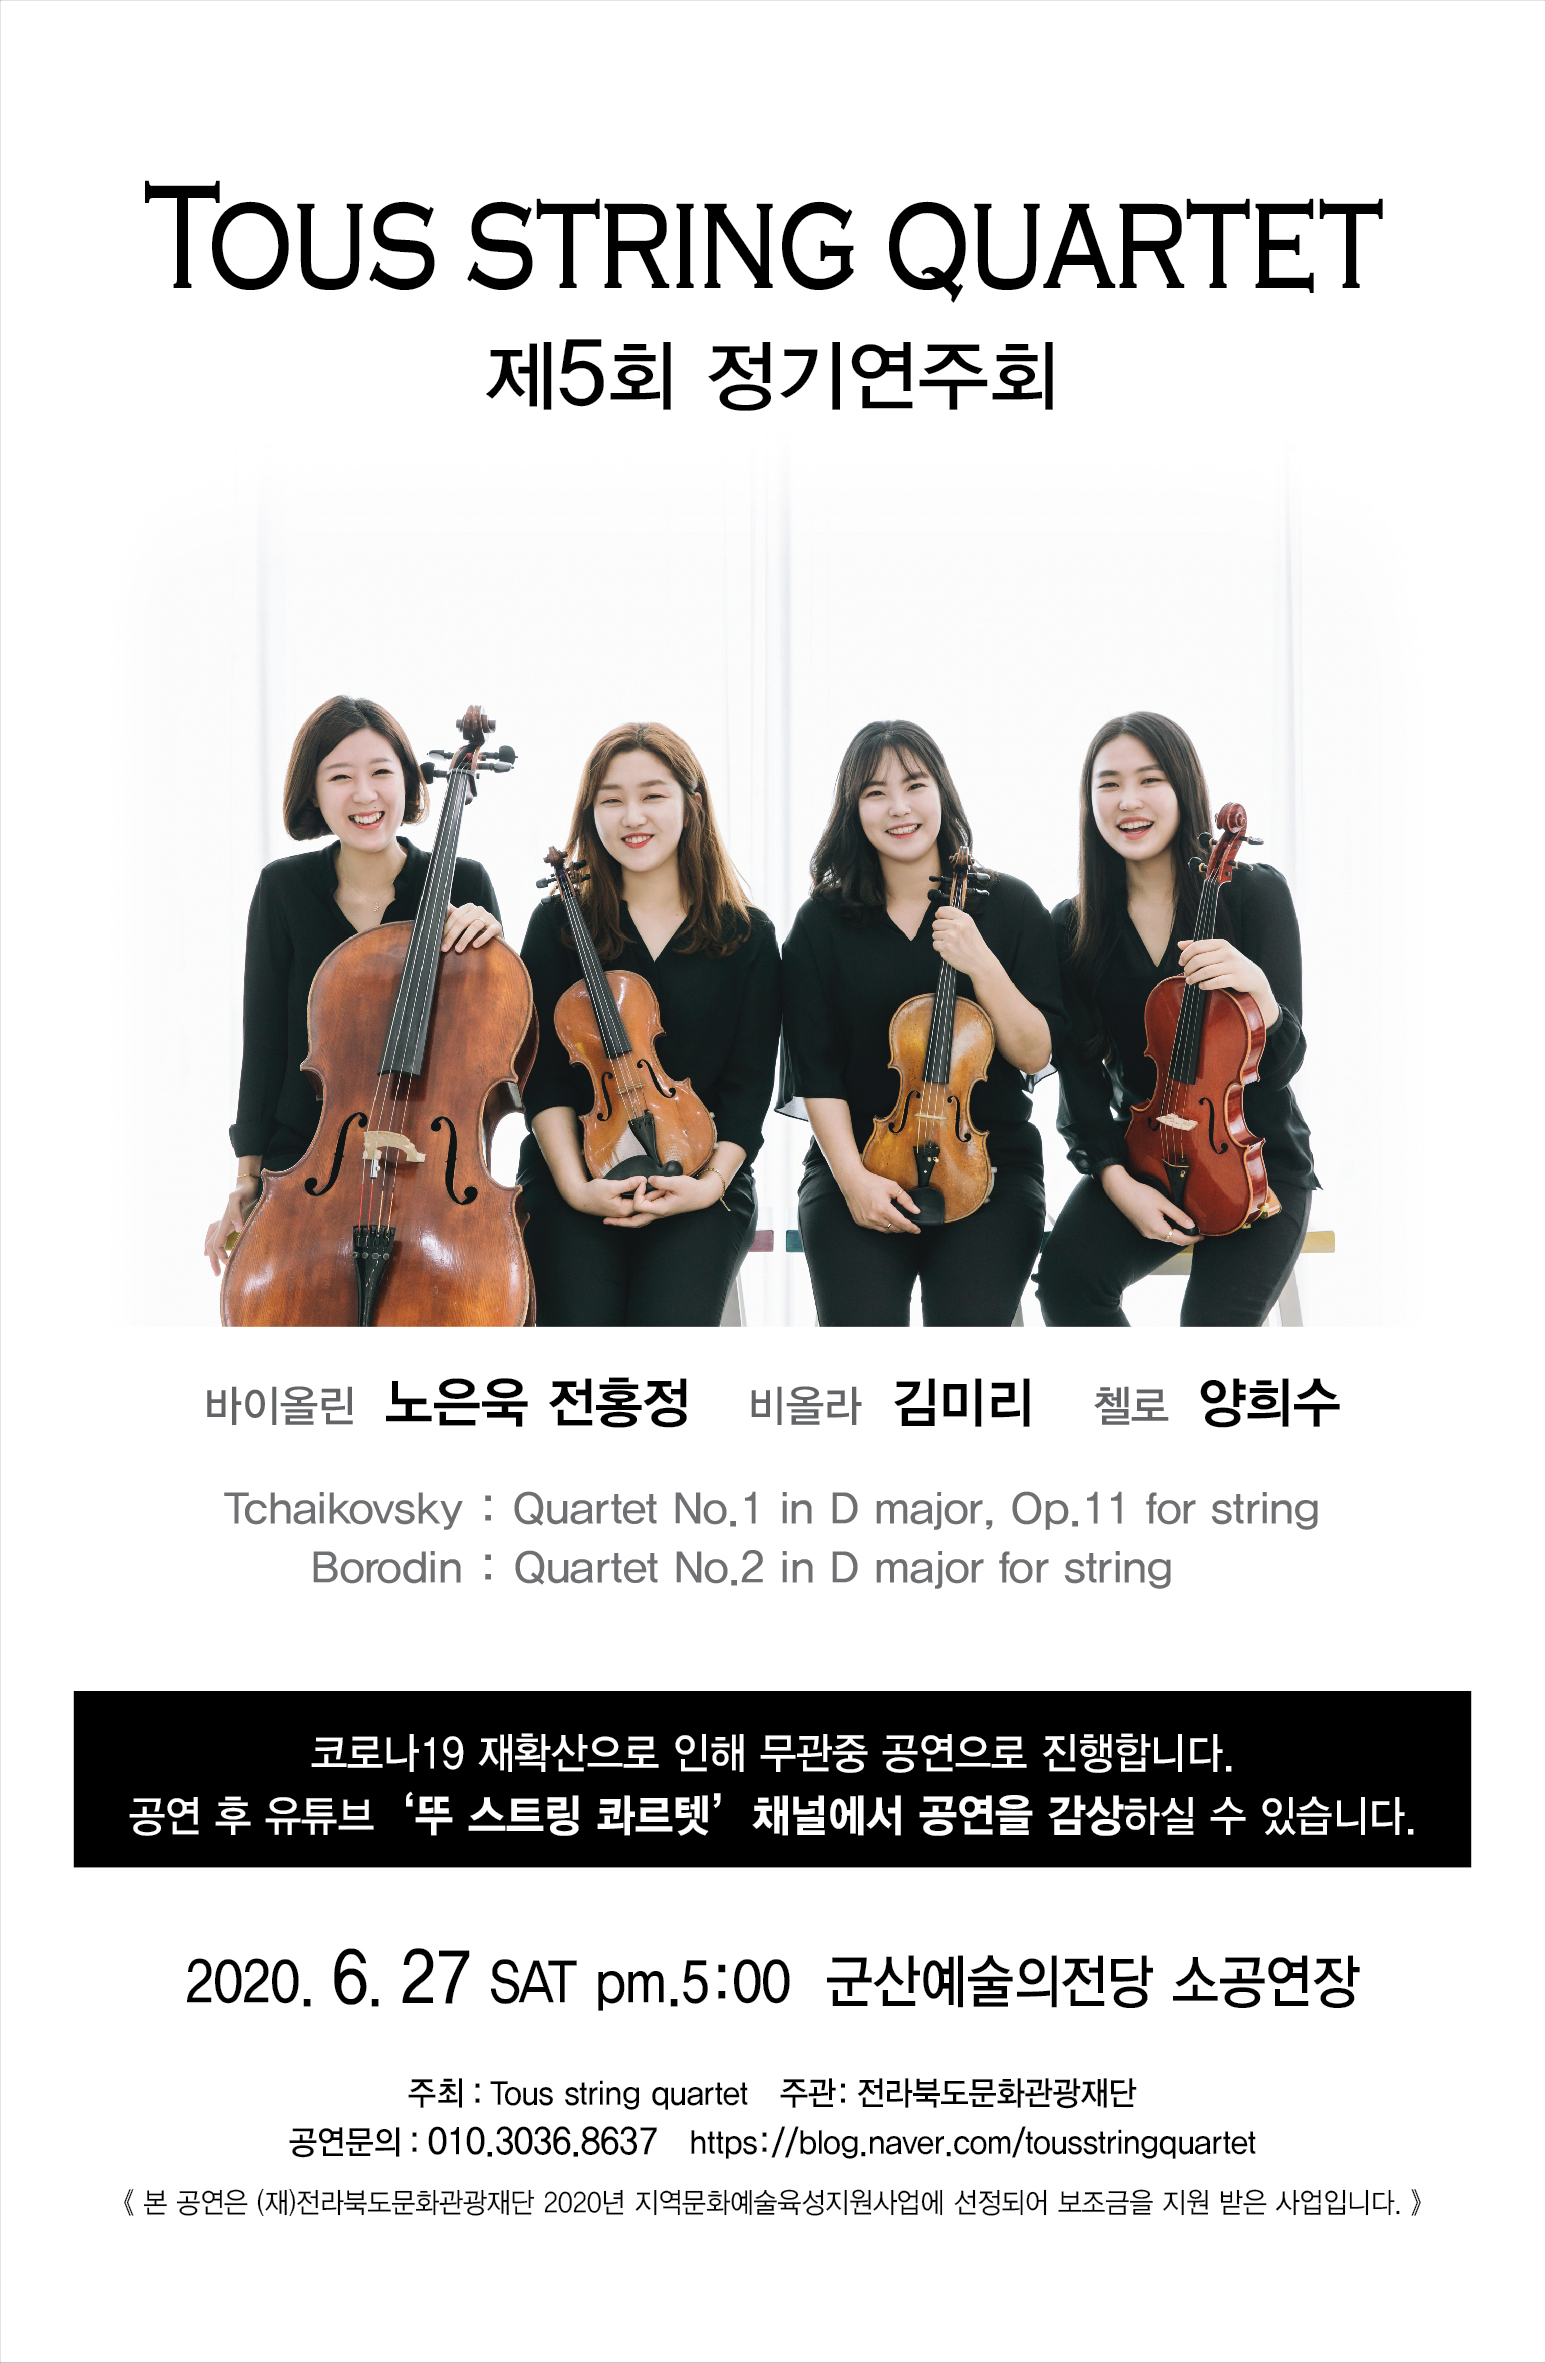 Tous string quartet 제5회 정기연주회(무관중 공연)